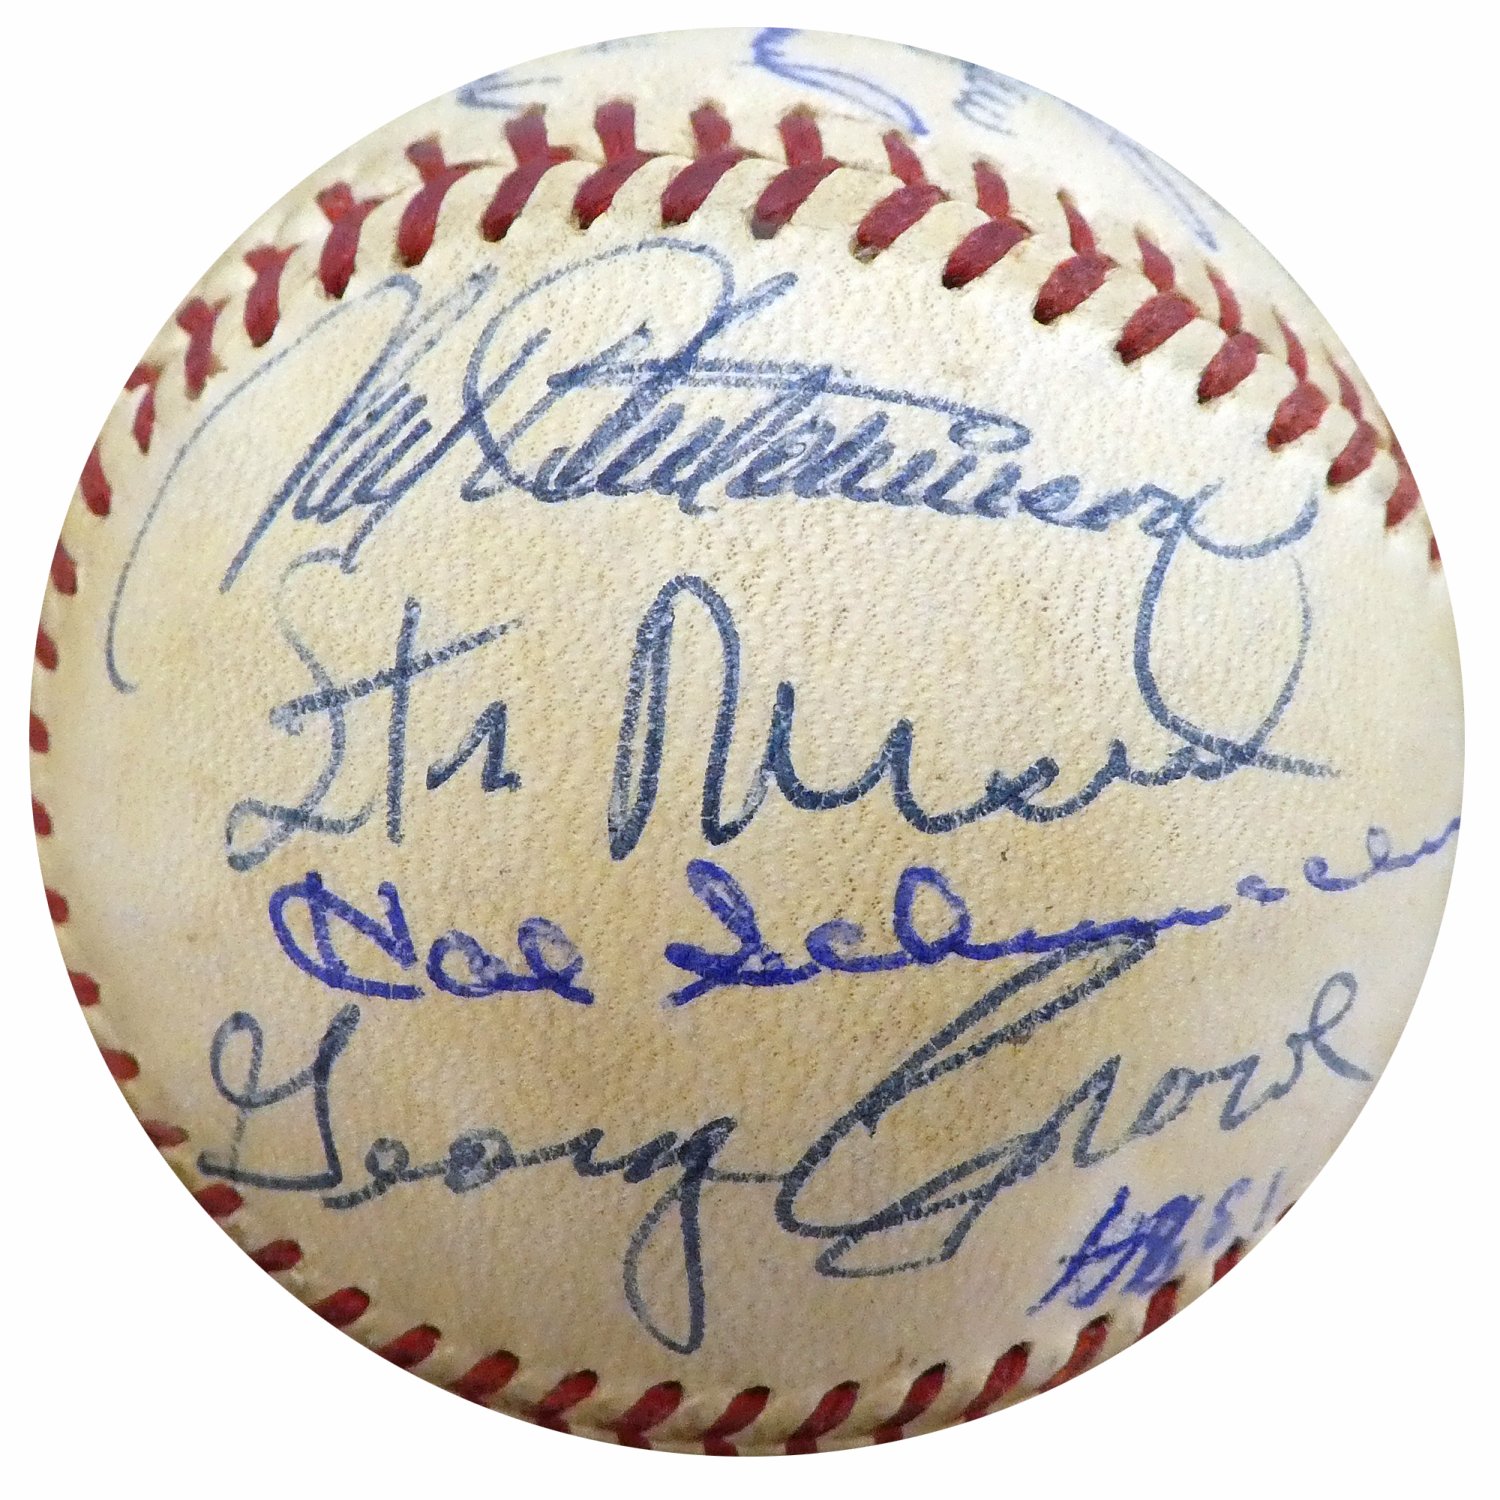 St. Louis Cardinals MLB Memorabilia & Signed Baseball Collectibles